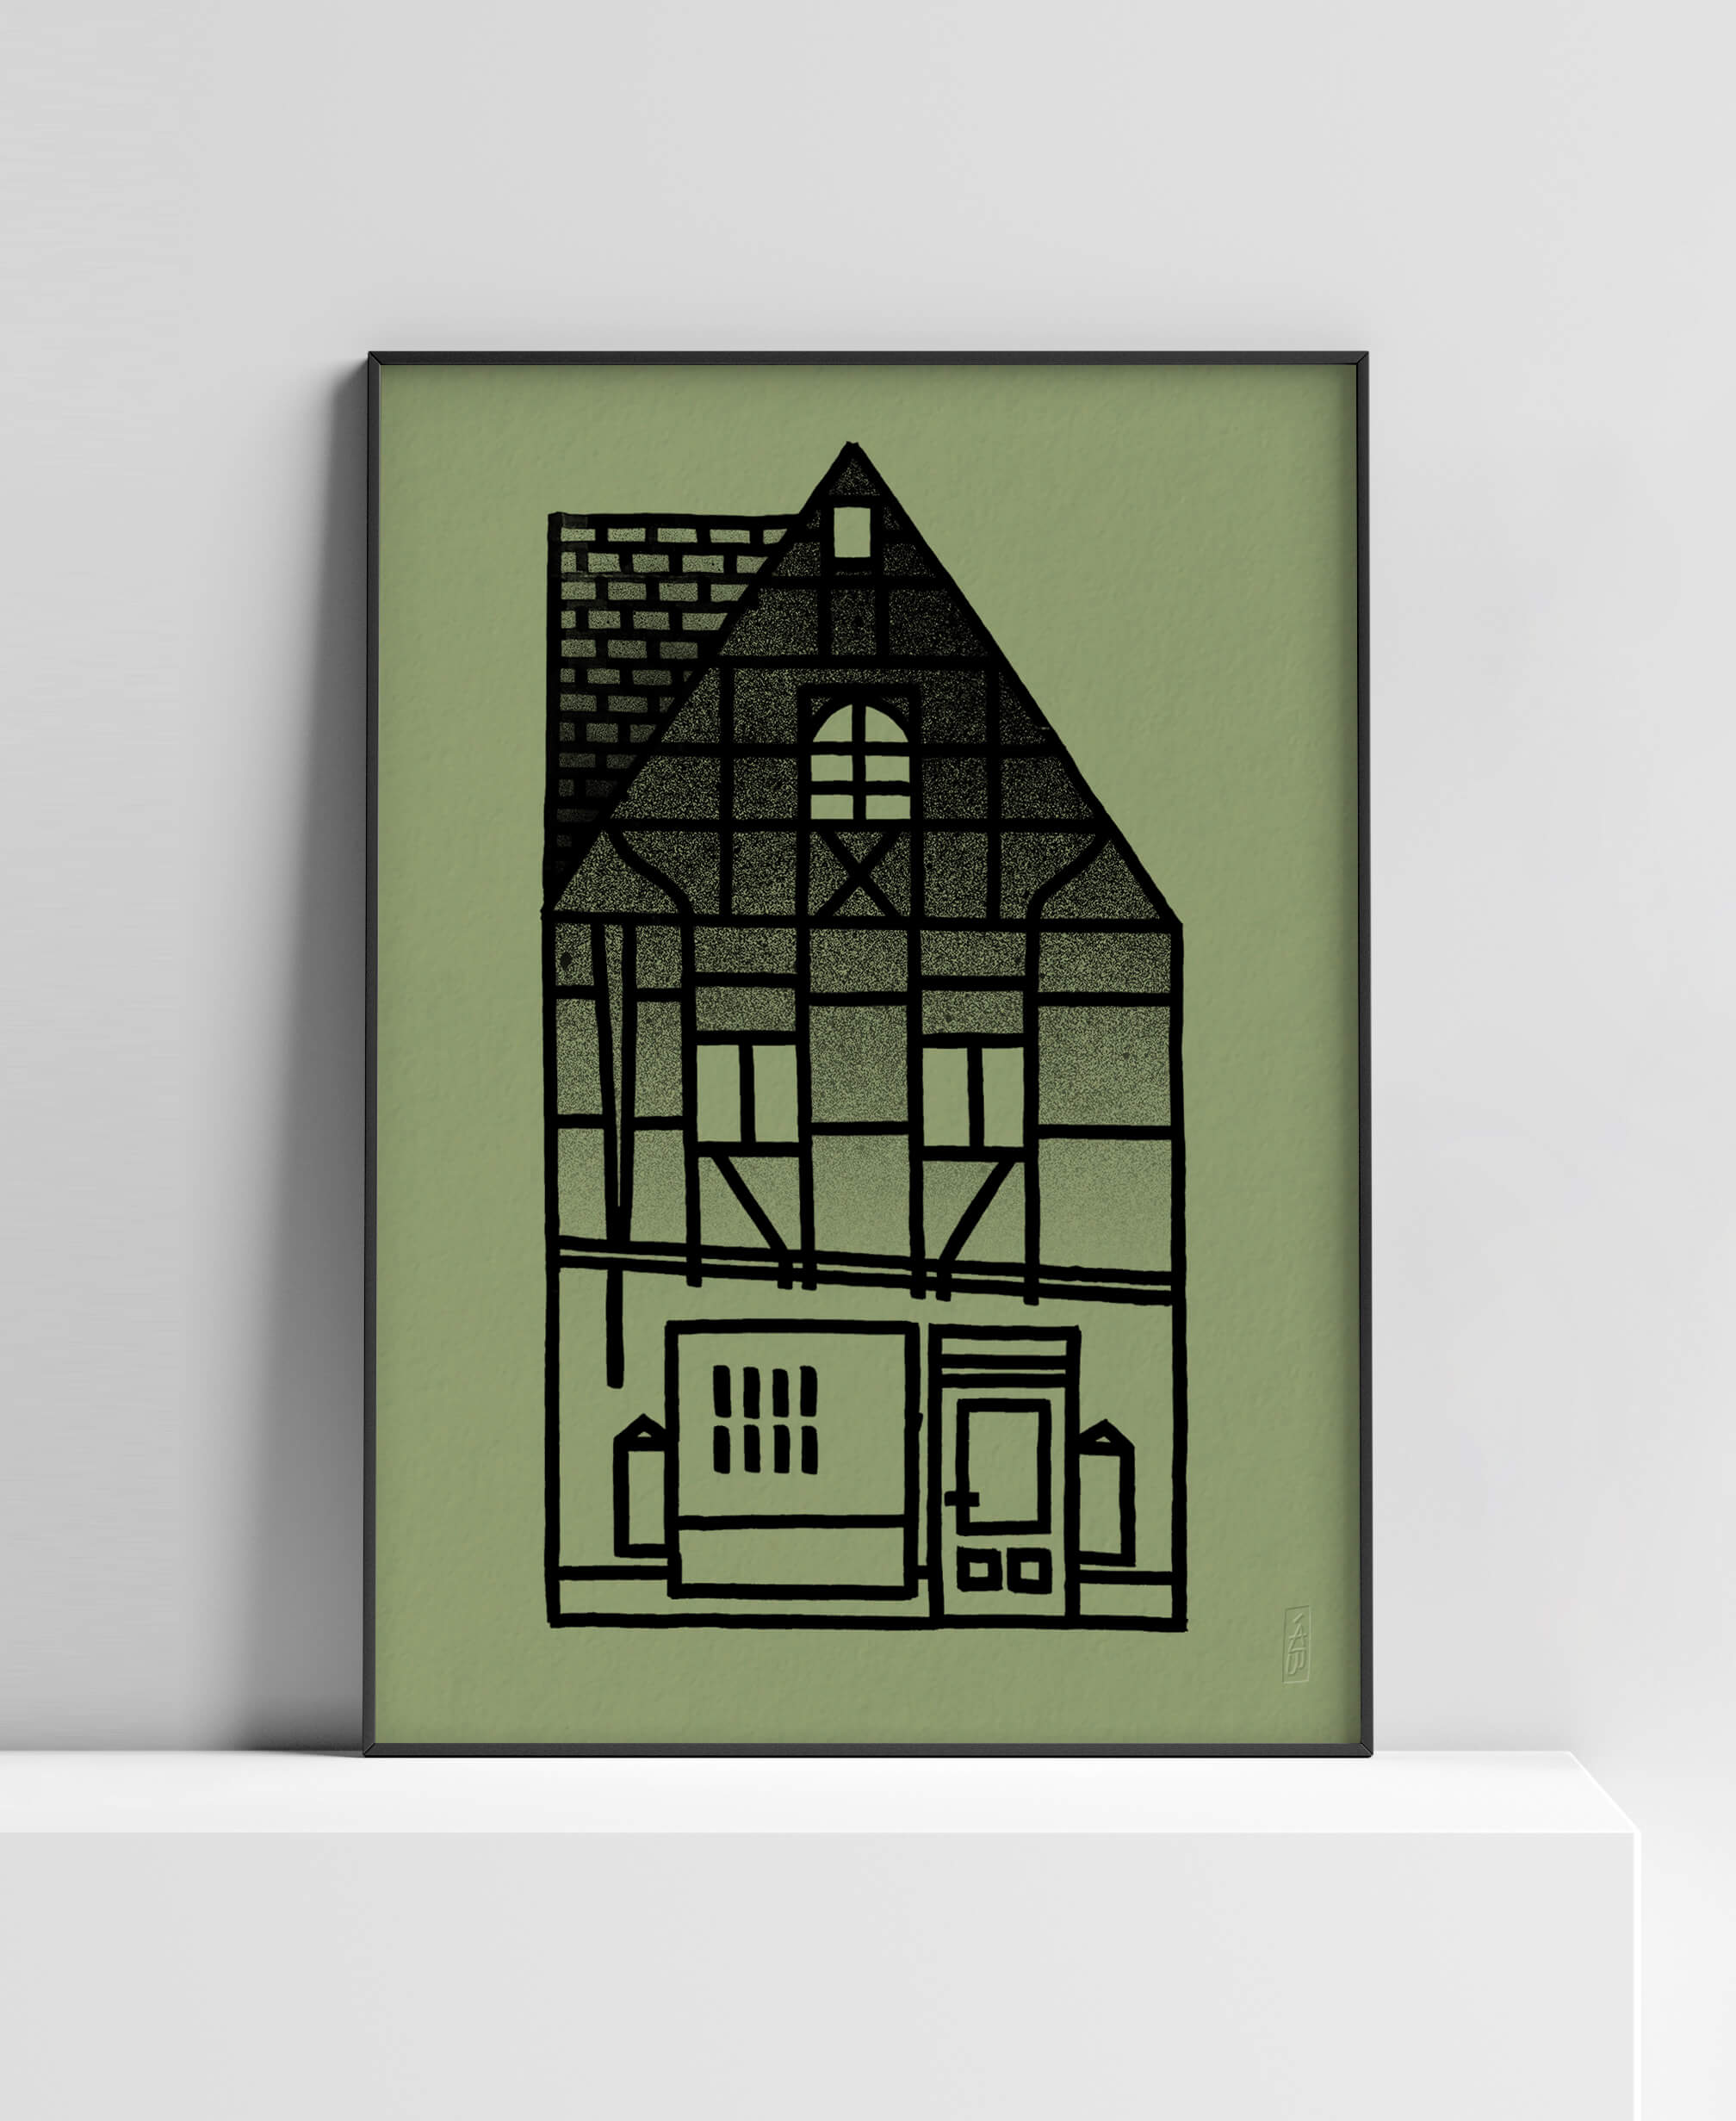 studio_andrebritz_buttermarkt_poster_house-grain_001_1